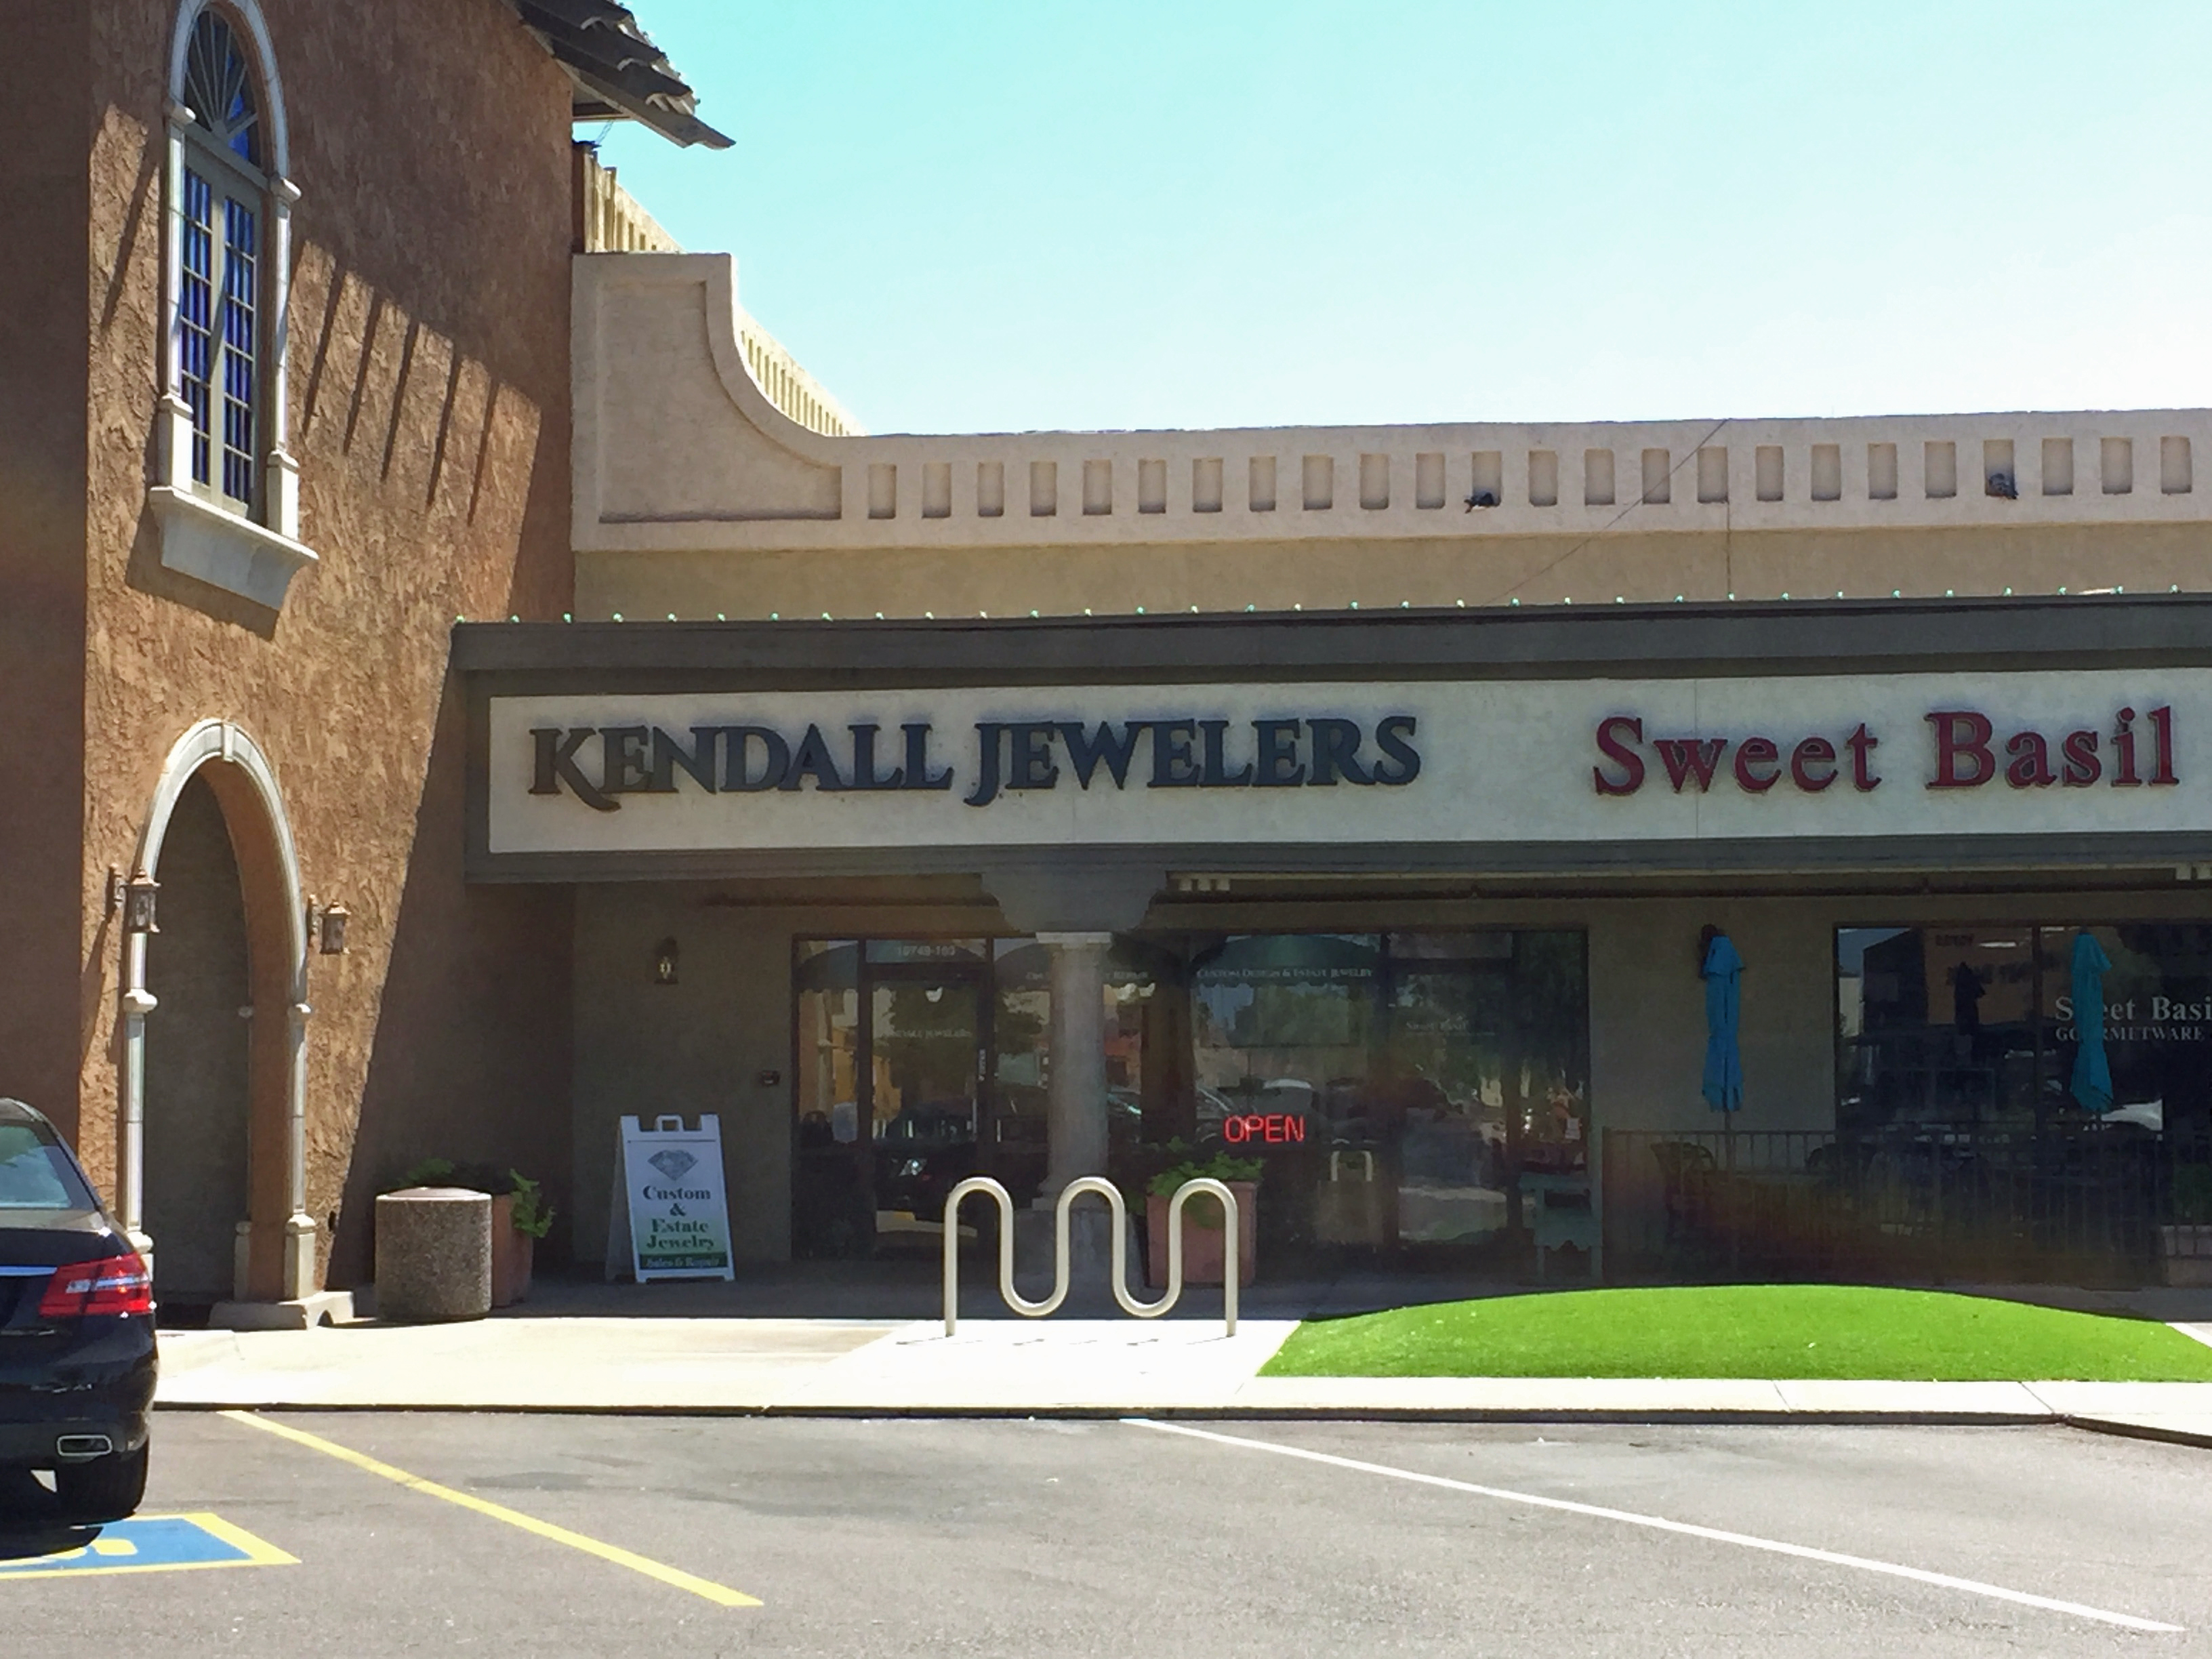 Kendall 22K Gold Bracelet - Place An Order Now! – Virani Jewelers